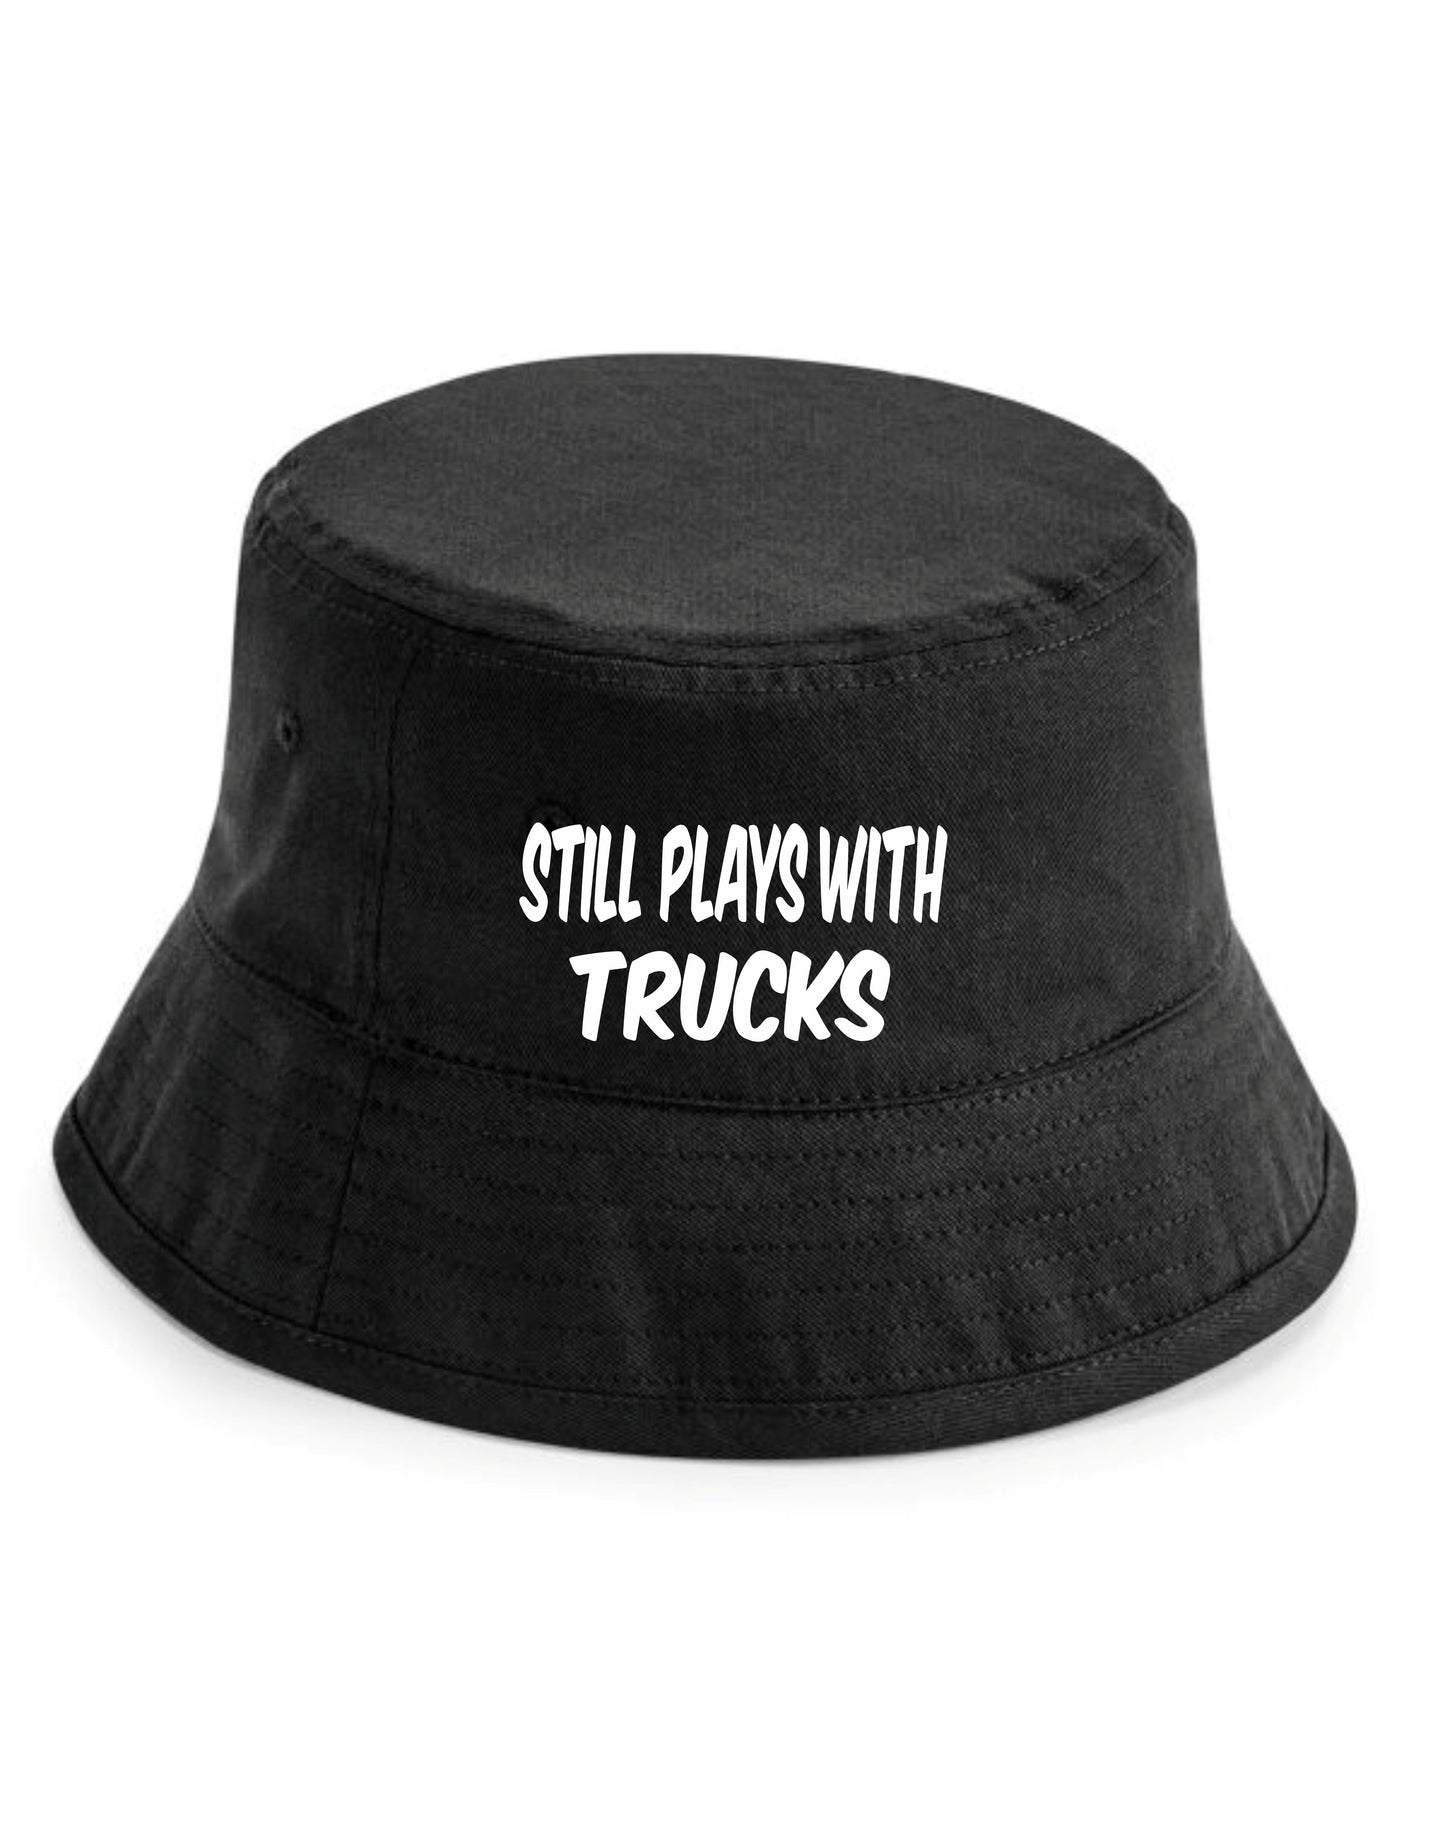 Still Plays With Trucks Bucket Hat Funny Birthday Gift for Men & Ladies